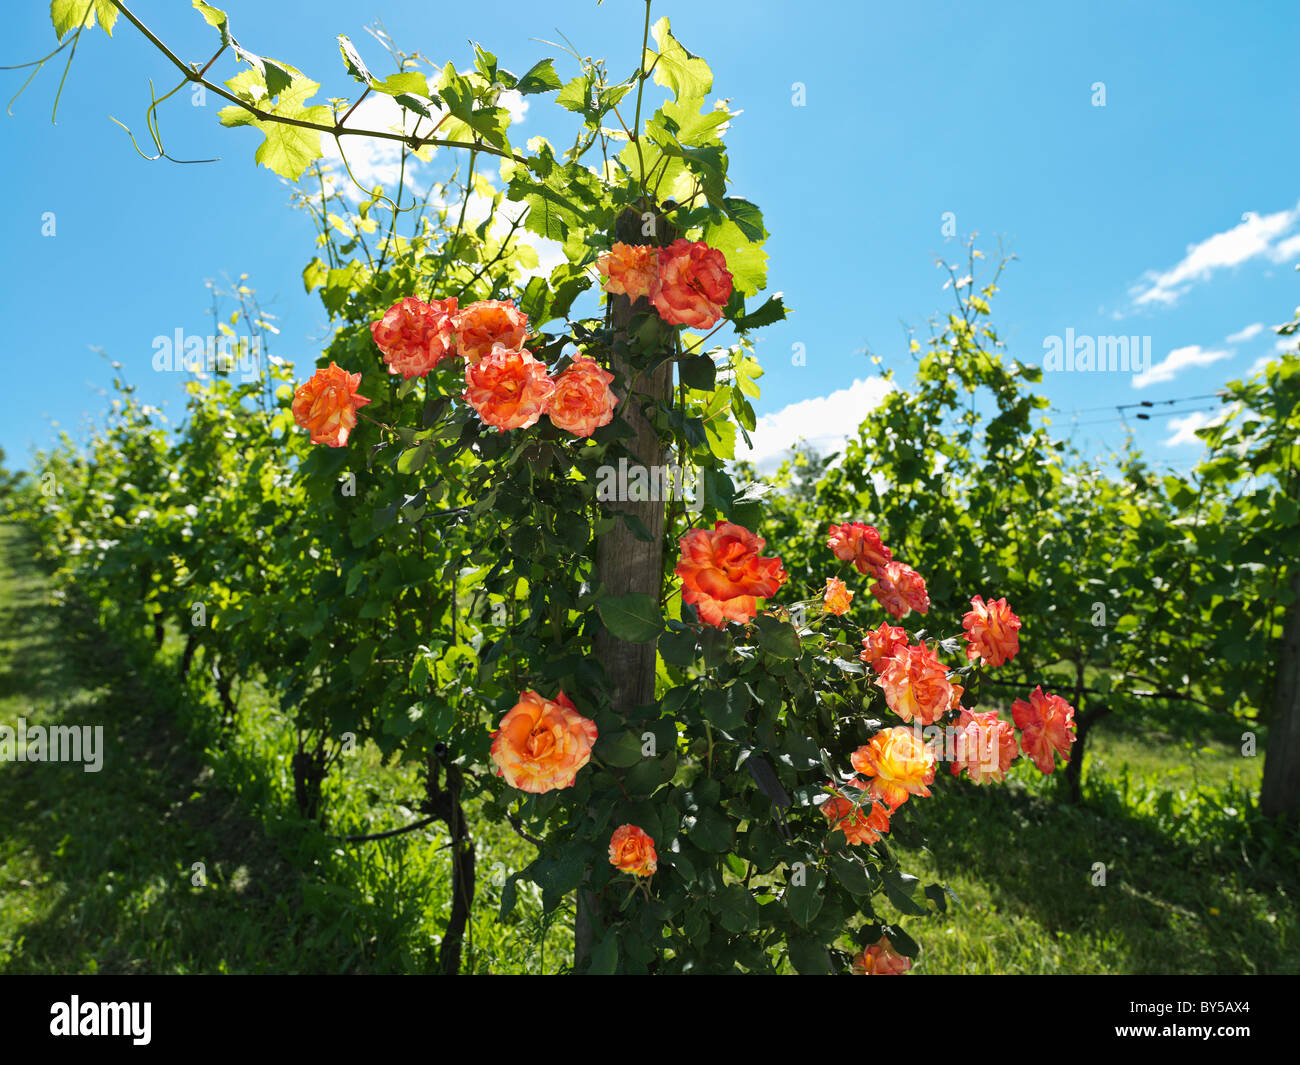 Canada,Ontario,Beamsville, Niagara Region,grape vineyards with roses planted at head rows Stock Photo